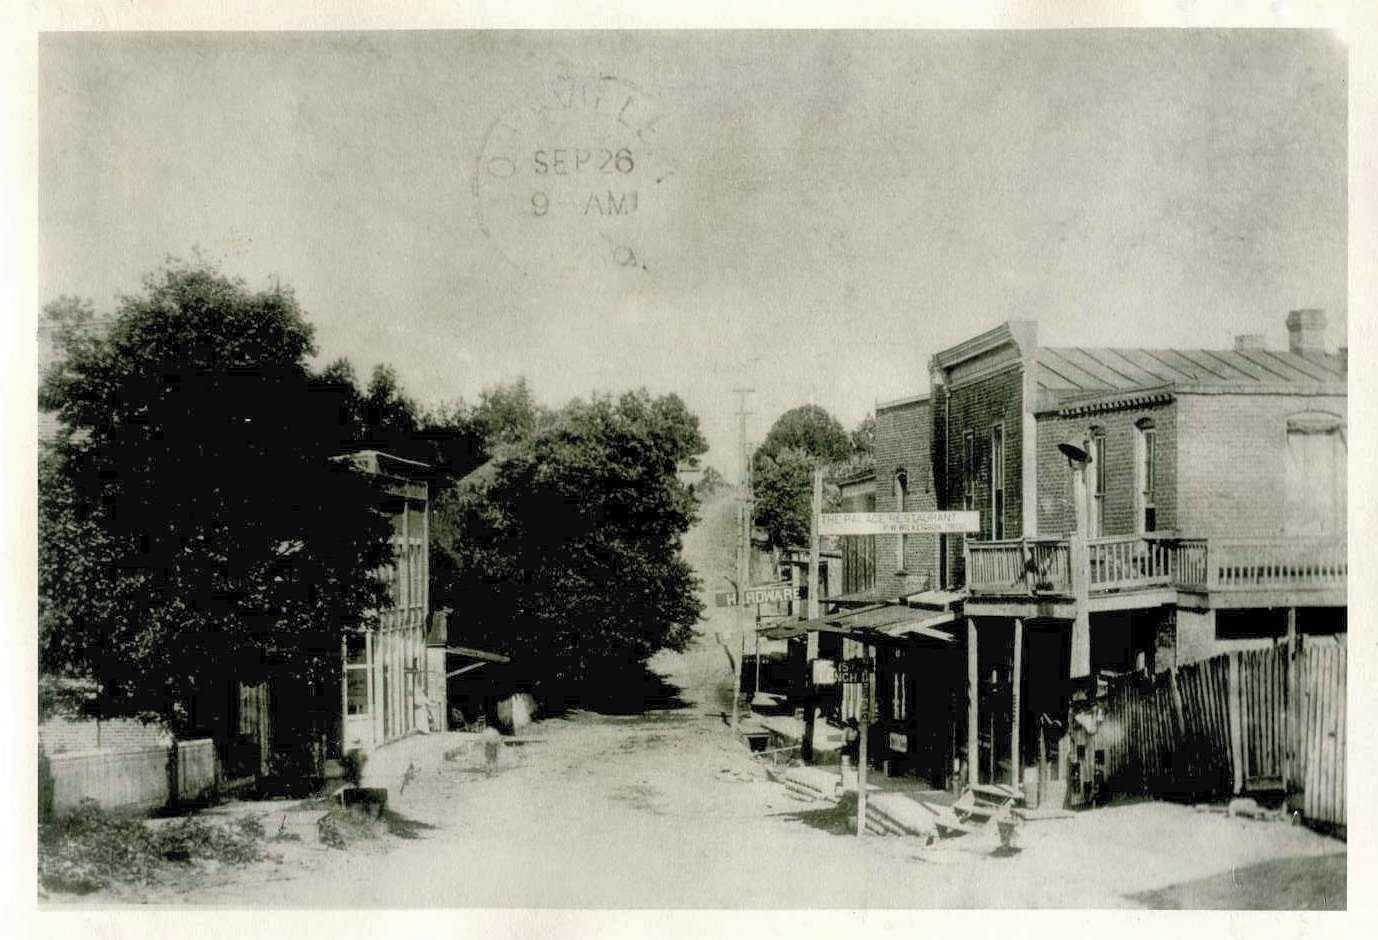 Looking East on Main Street 1900